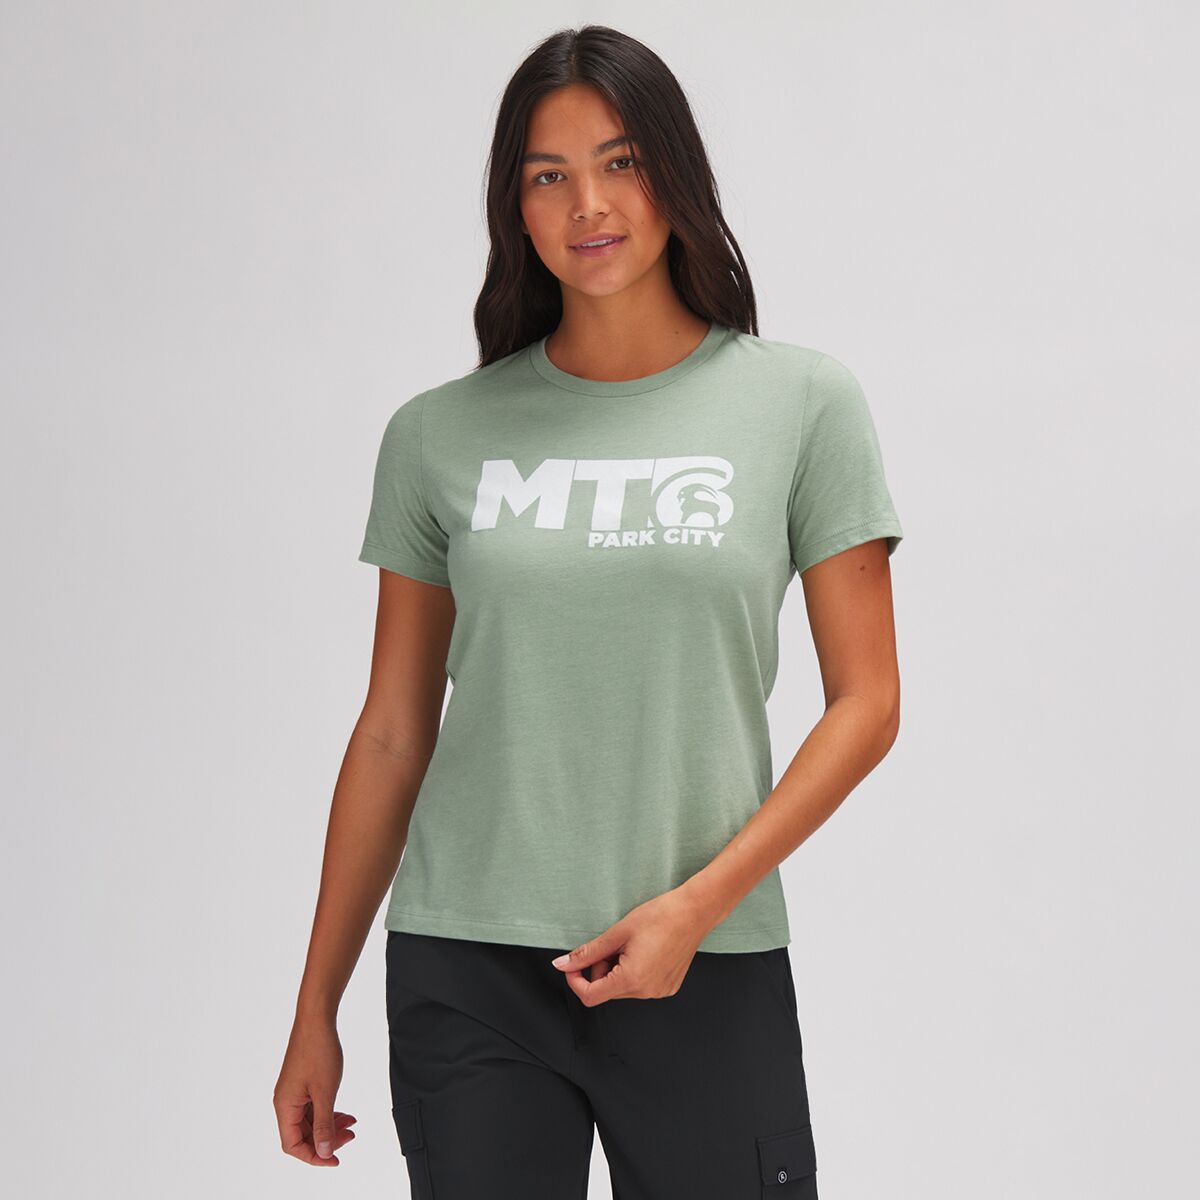 Backcountry MTB Park City T-Shirt - Women's